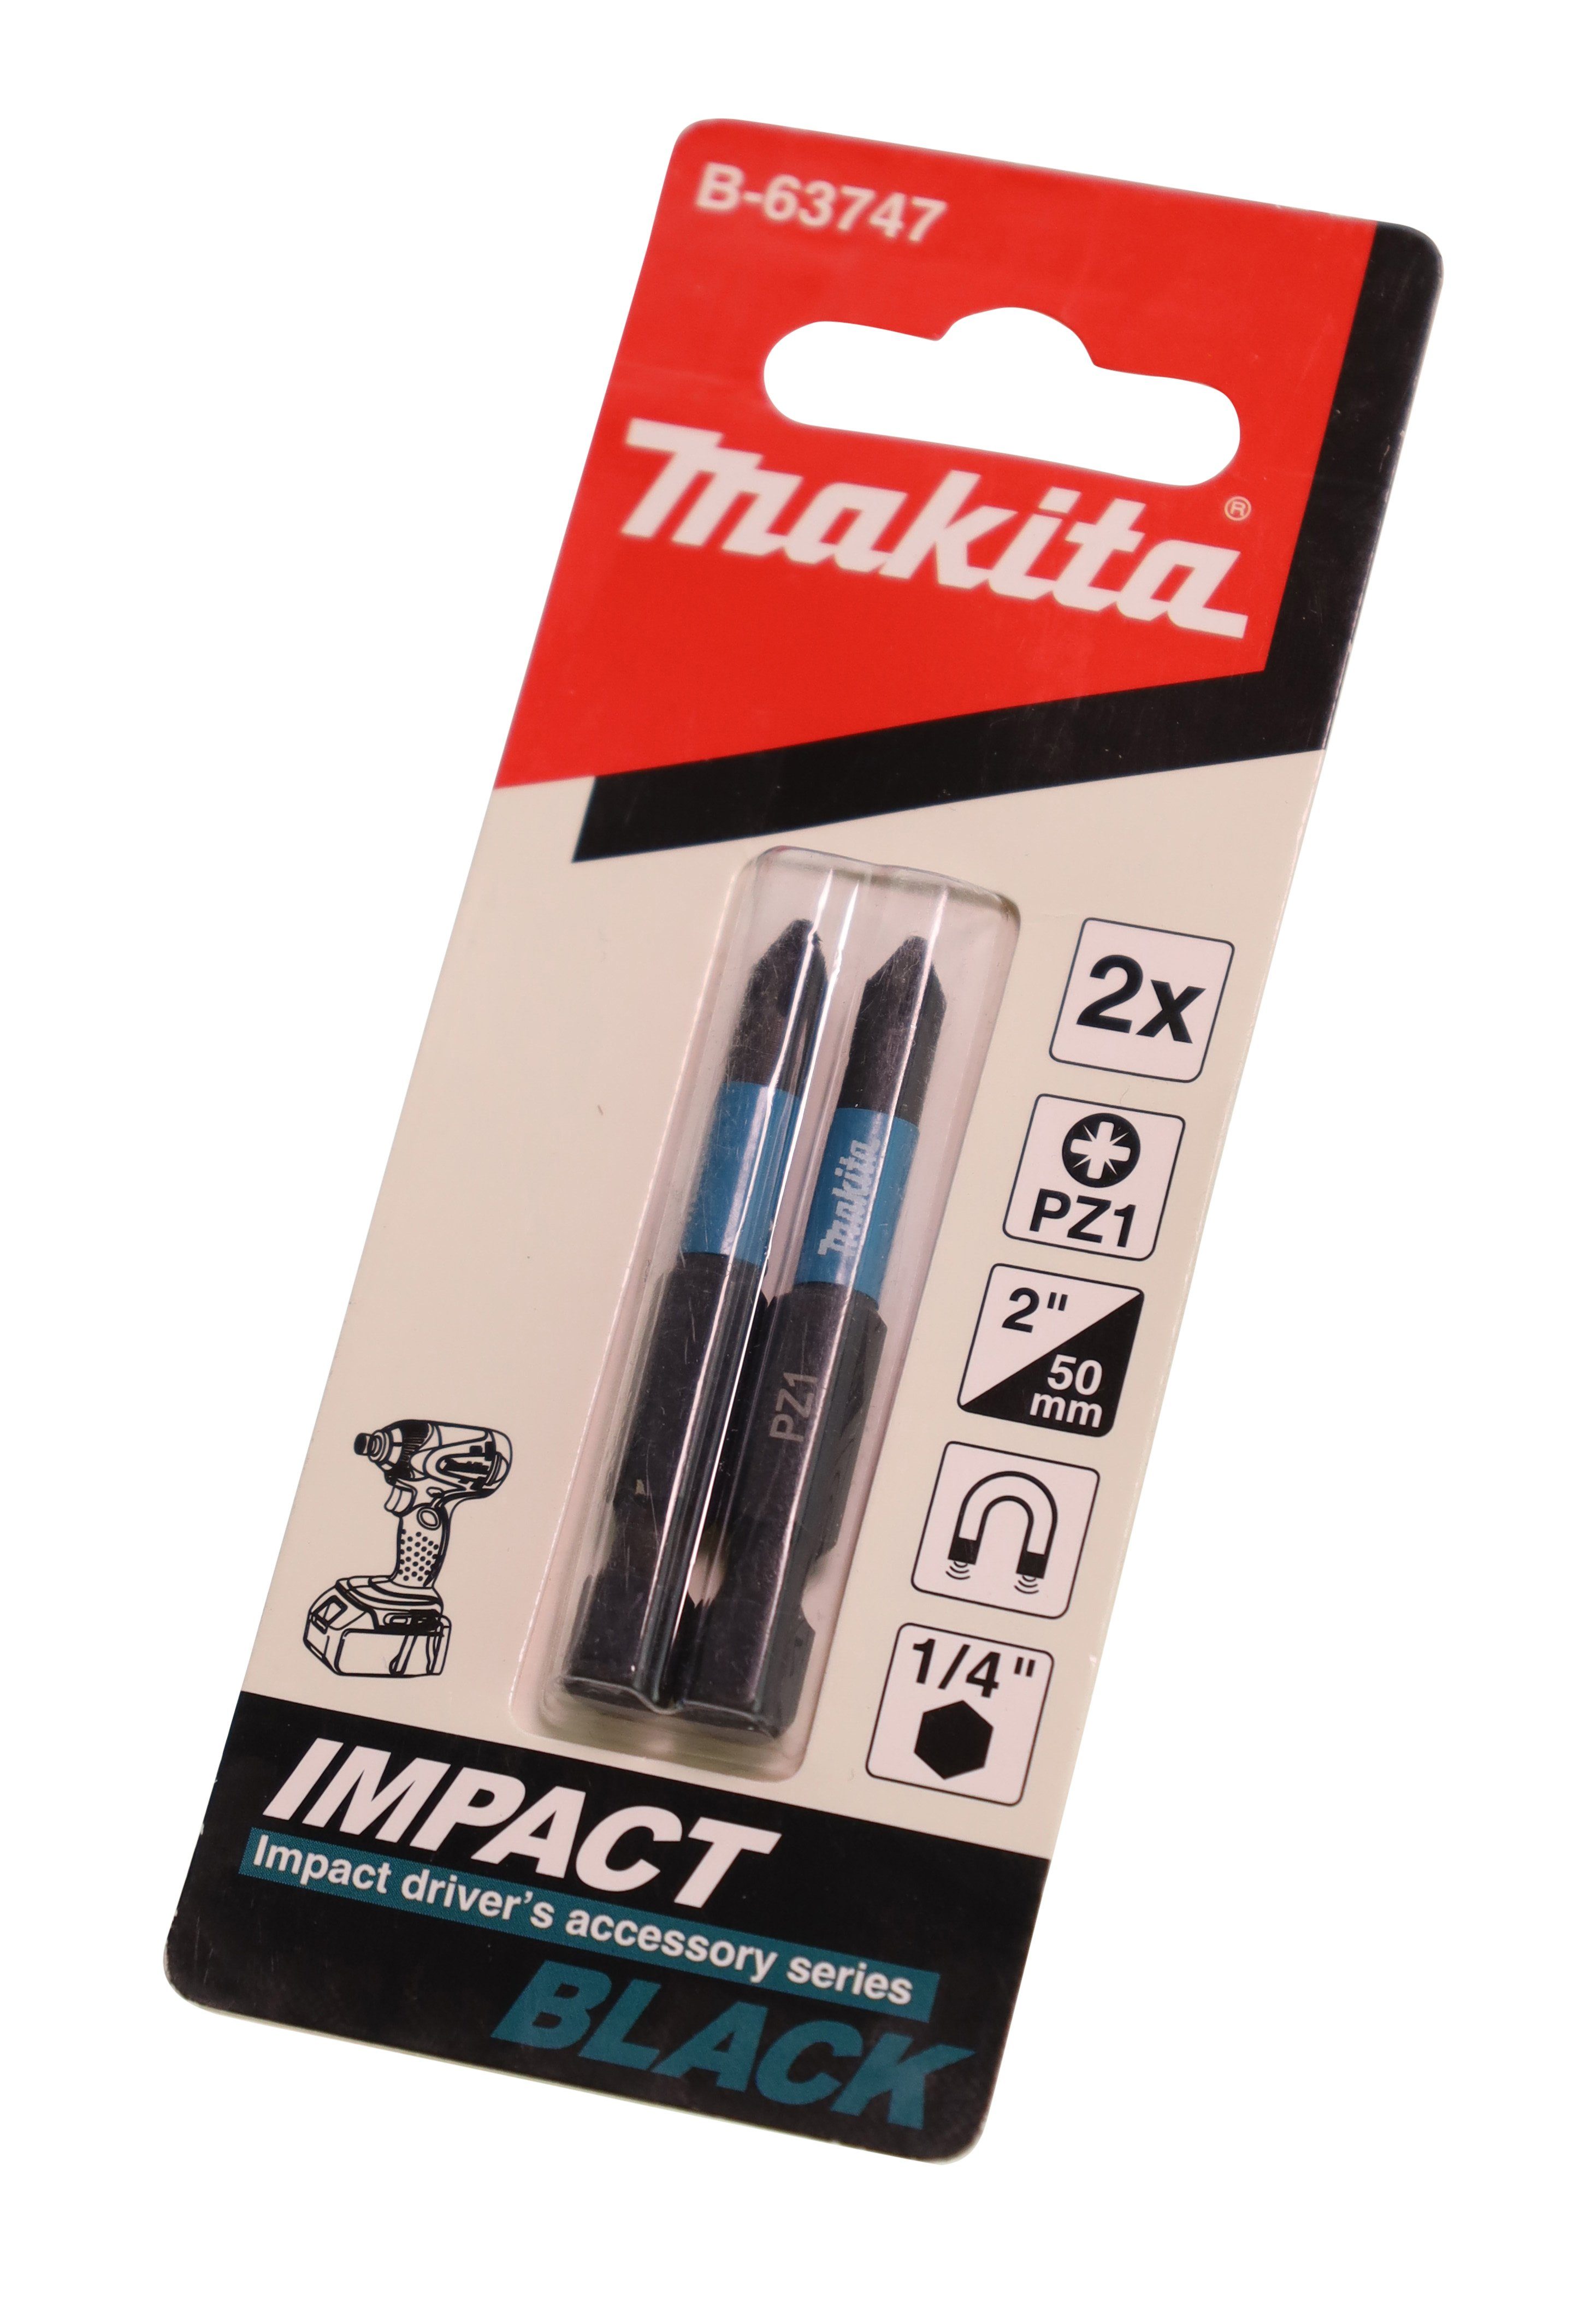 Makita Black, 1x50 B-63747 Bit-Set Stück, S2-Spezialstahl Bit und Makita 2 PZ1 Bohrer- Impact